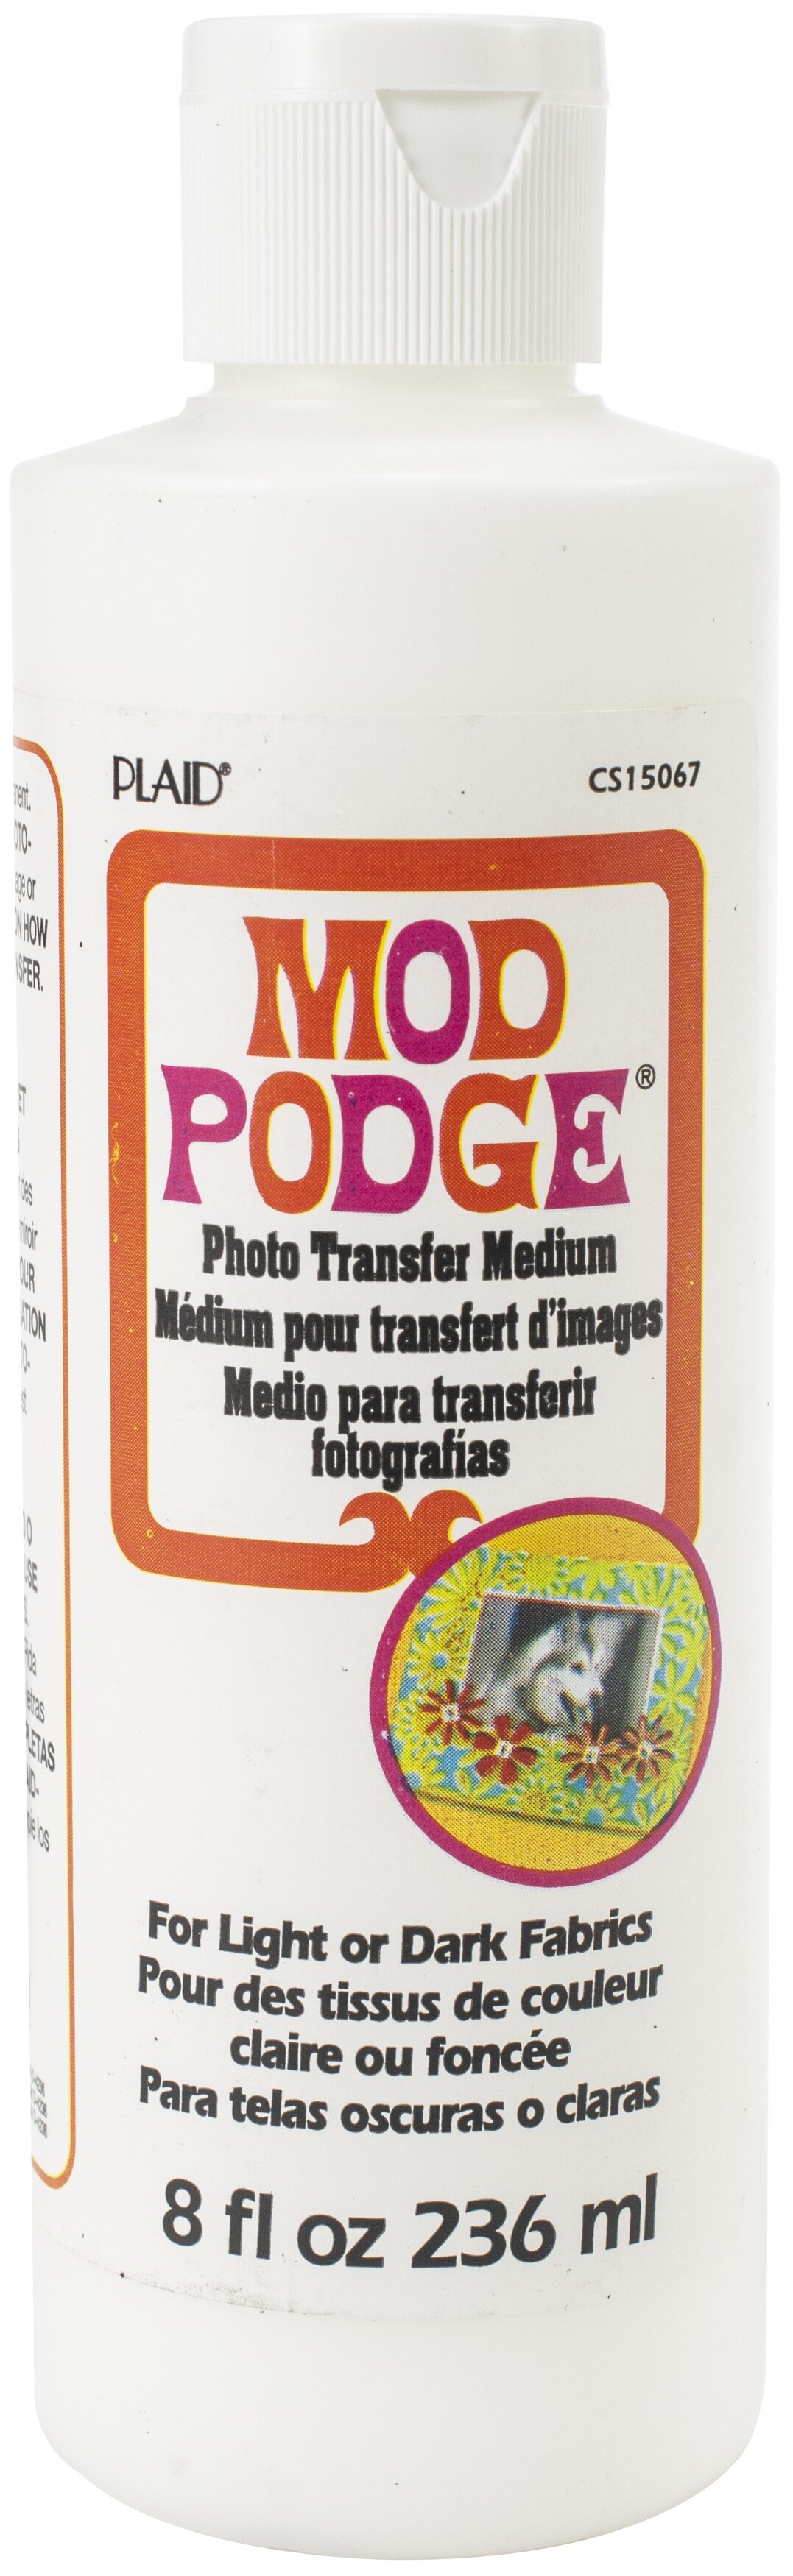 Plaid Mod Podge Photo Transfer Medium (Disponible en 2 tamaños)